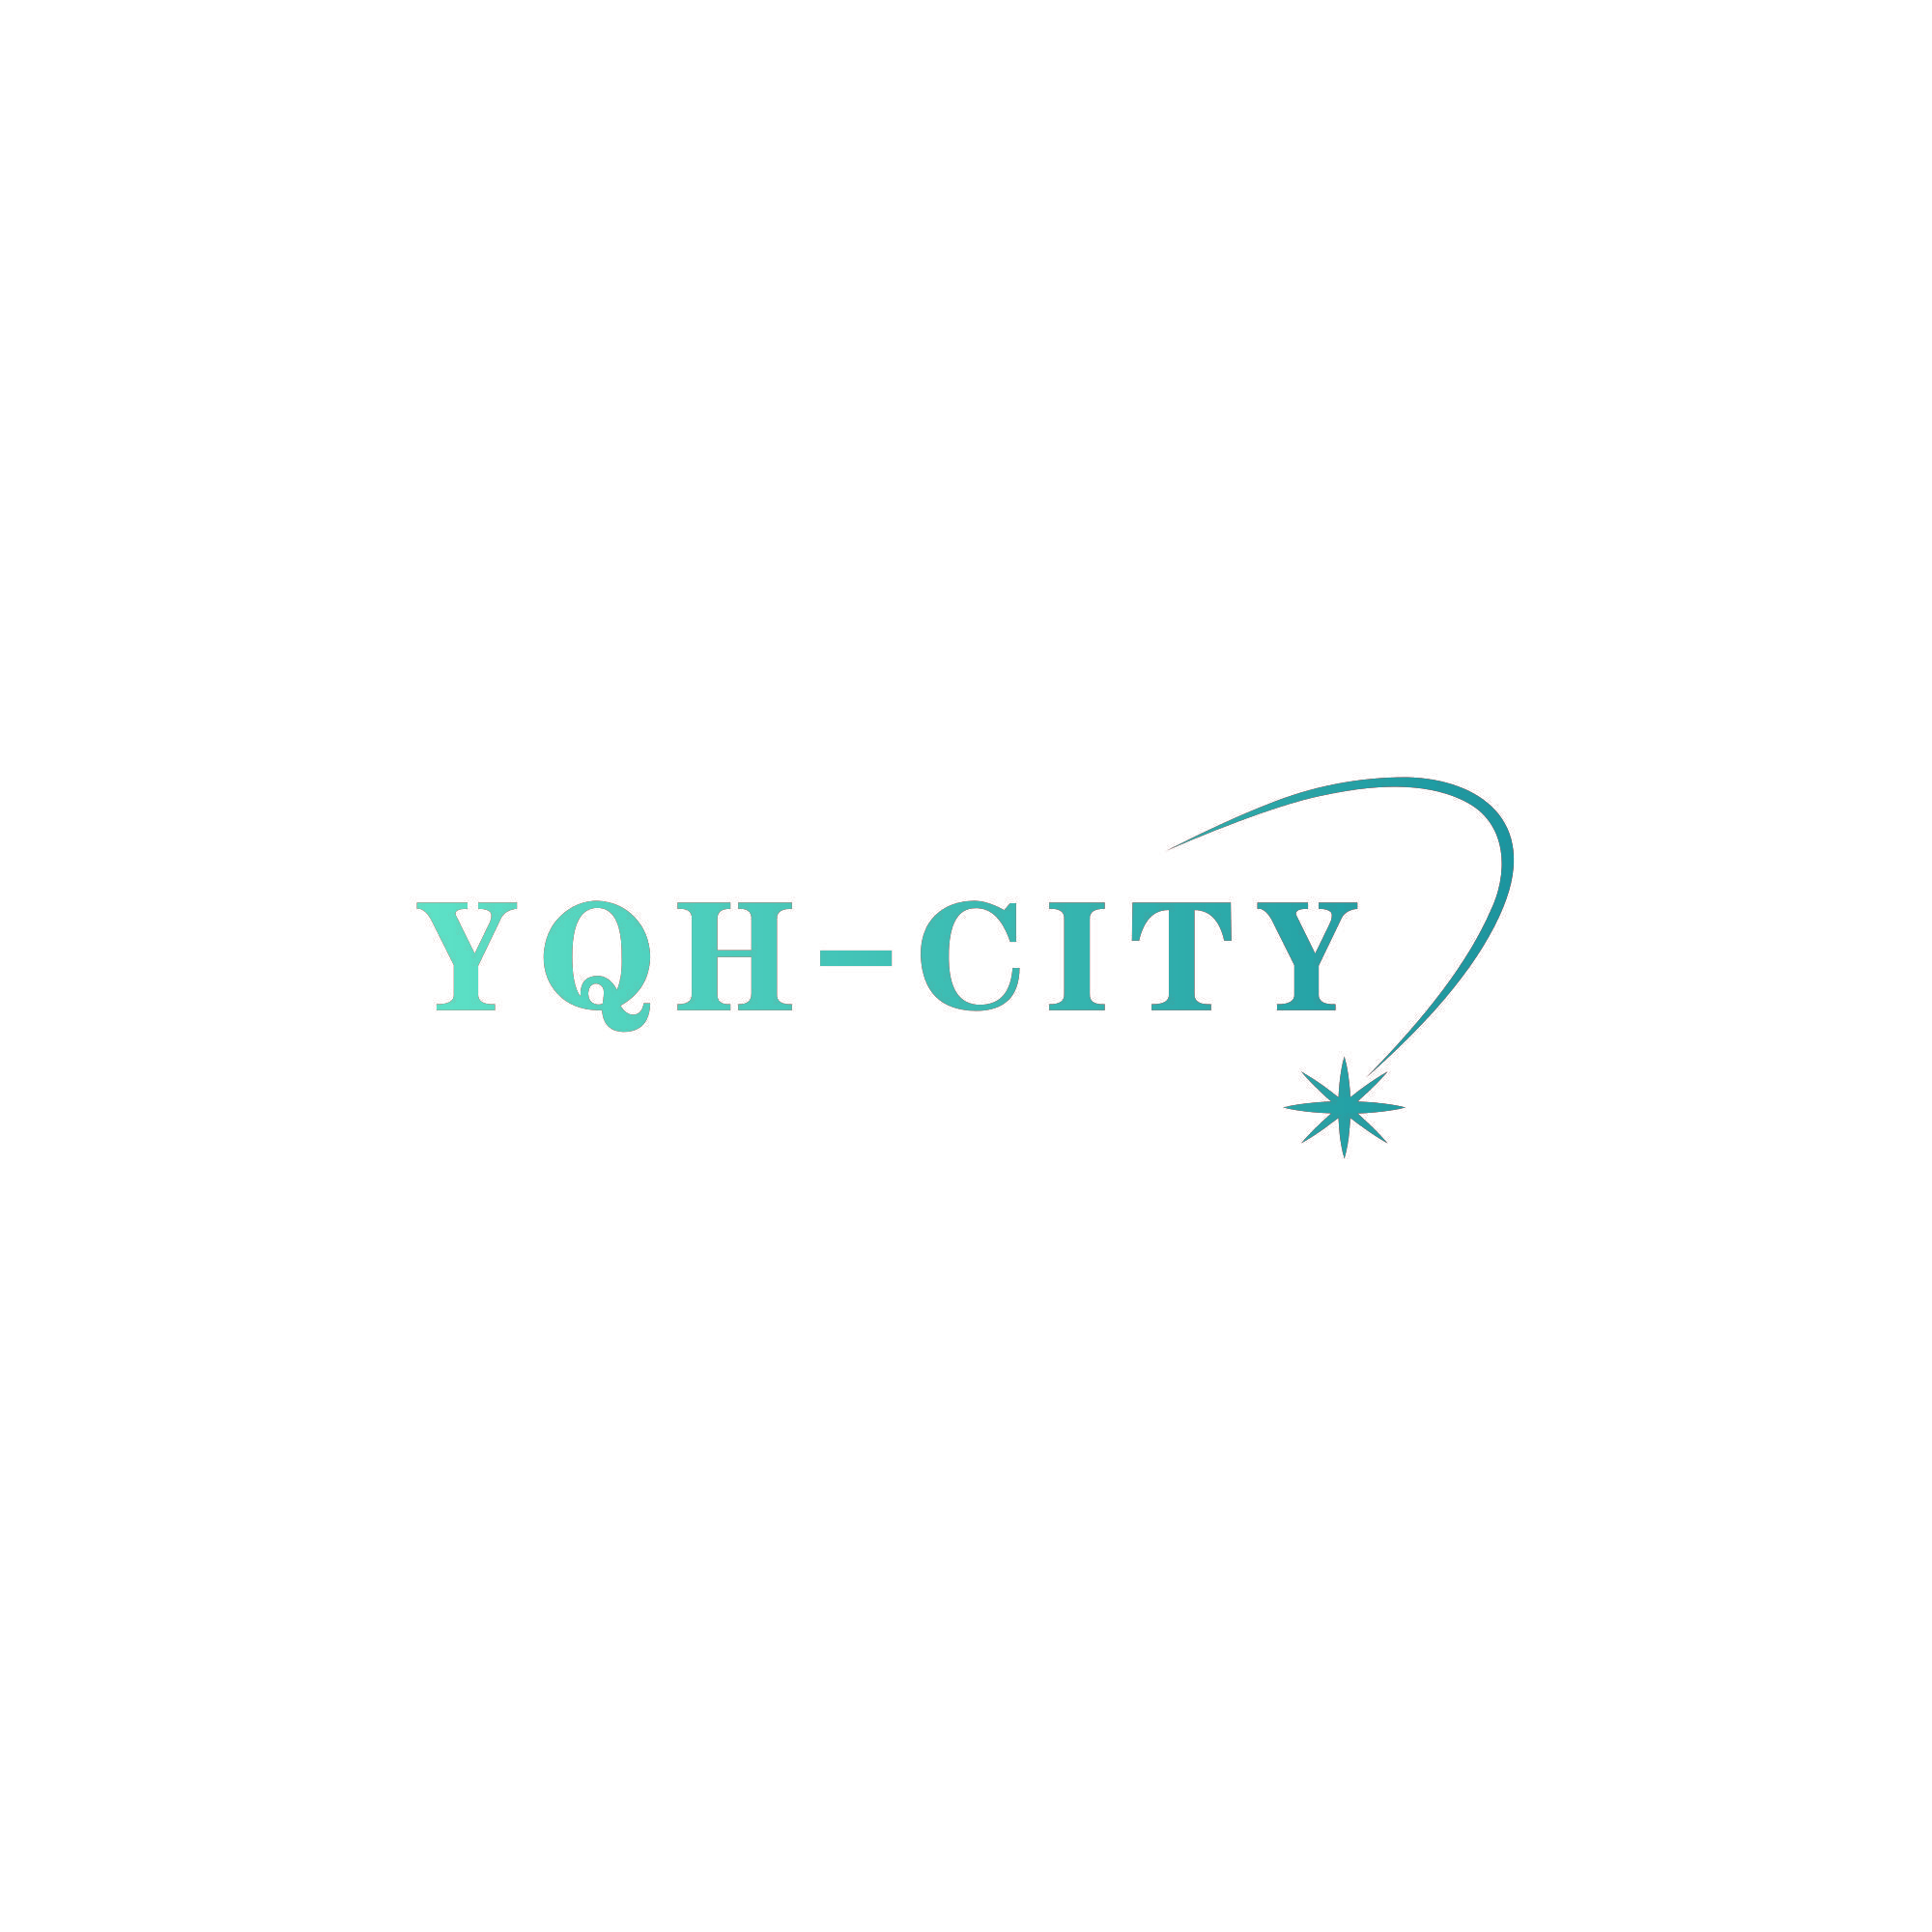 YQH-CITY